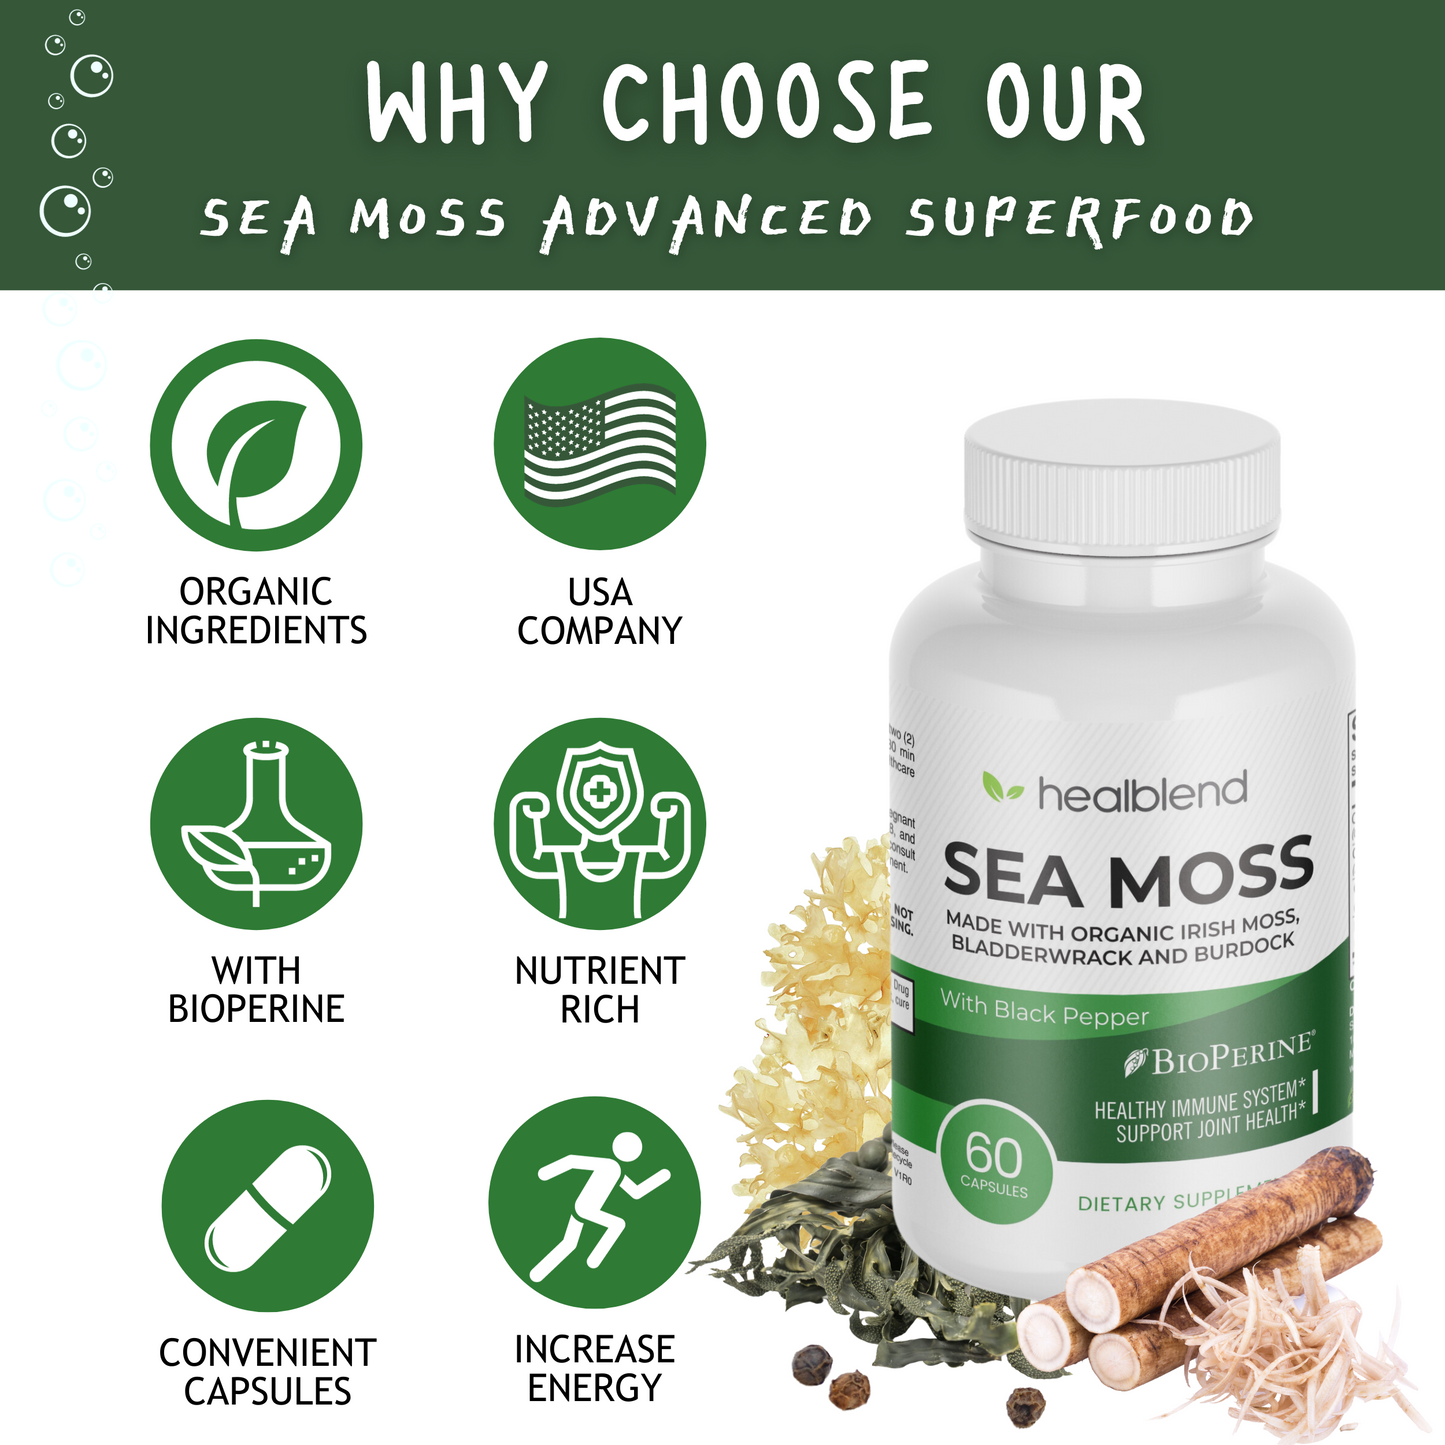 Organic Sea Moss Complex